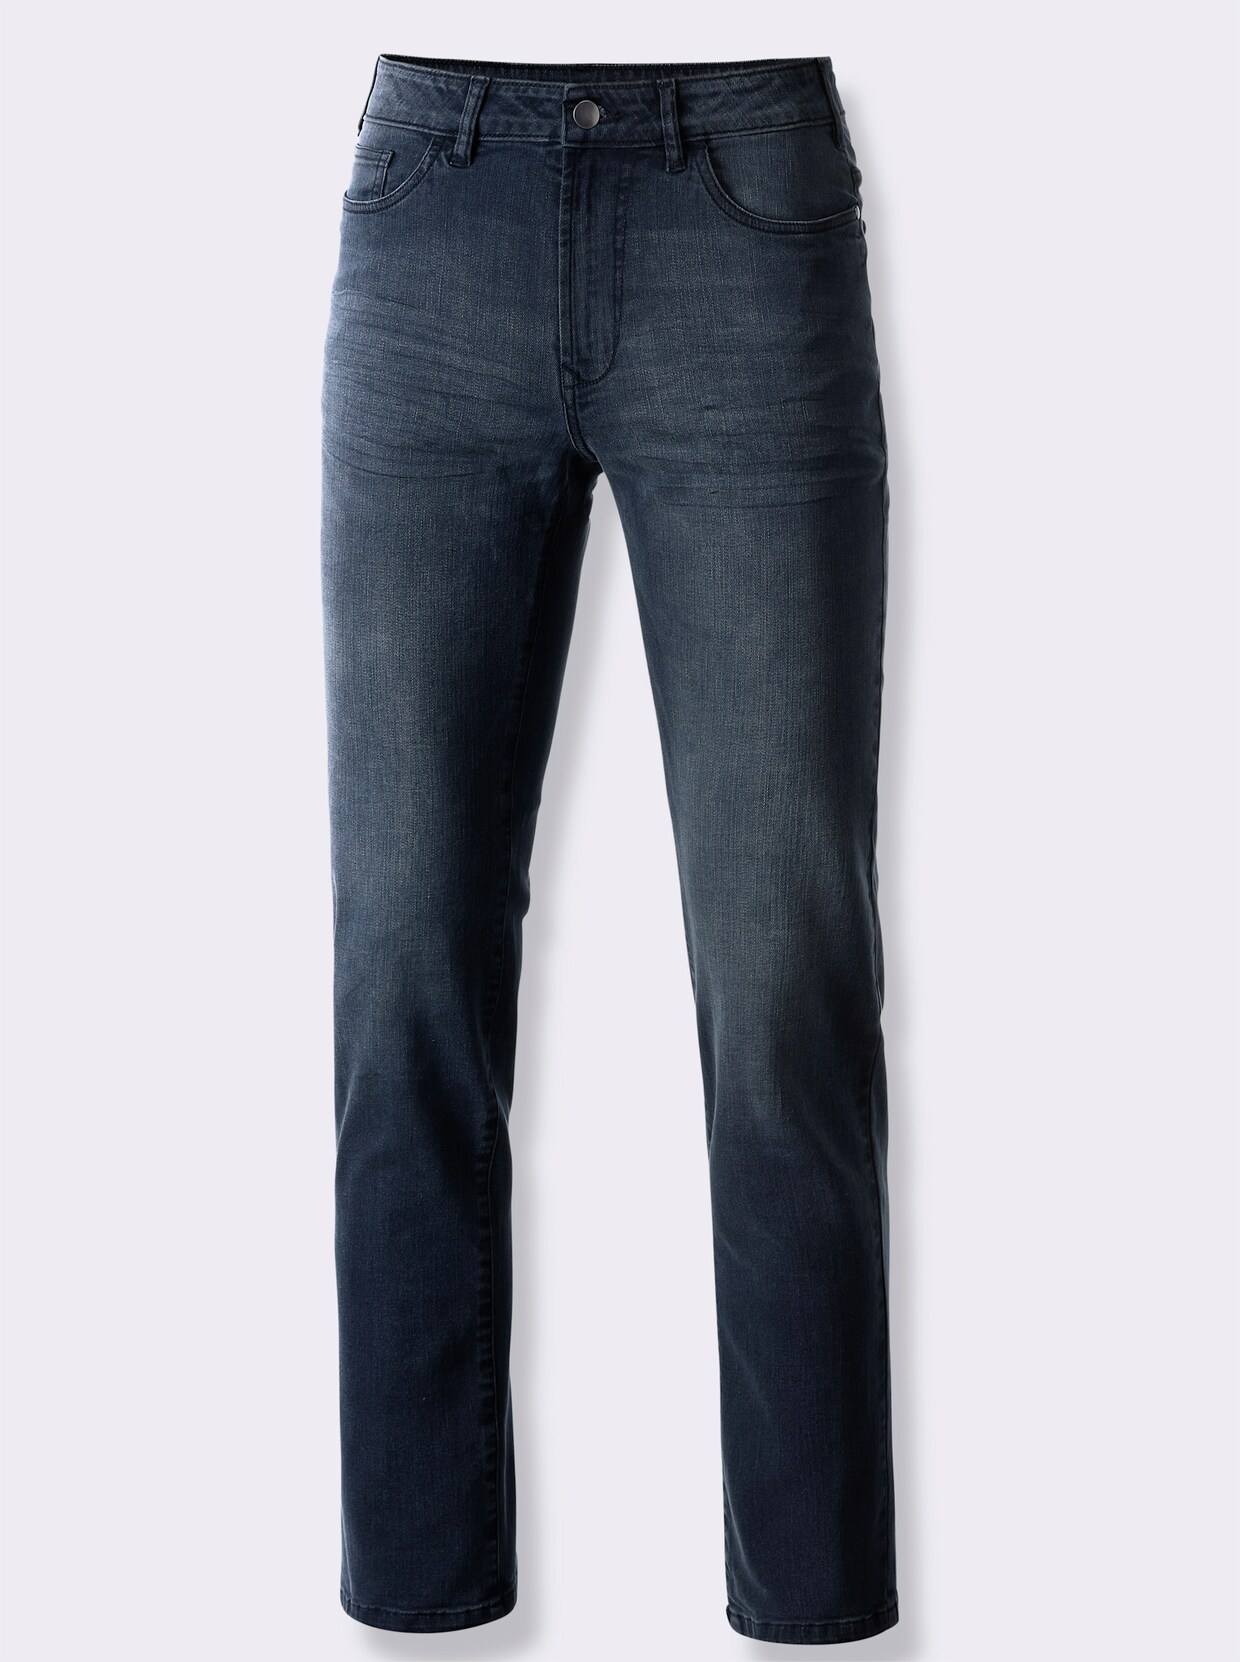 Marco Donati Jeans - dark blue-denim